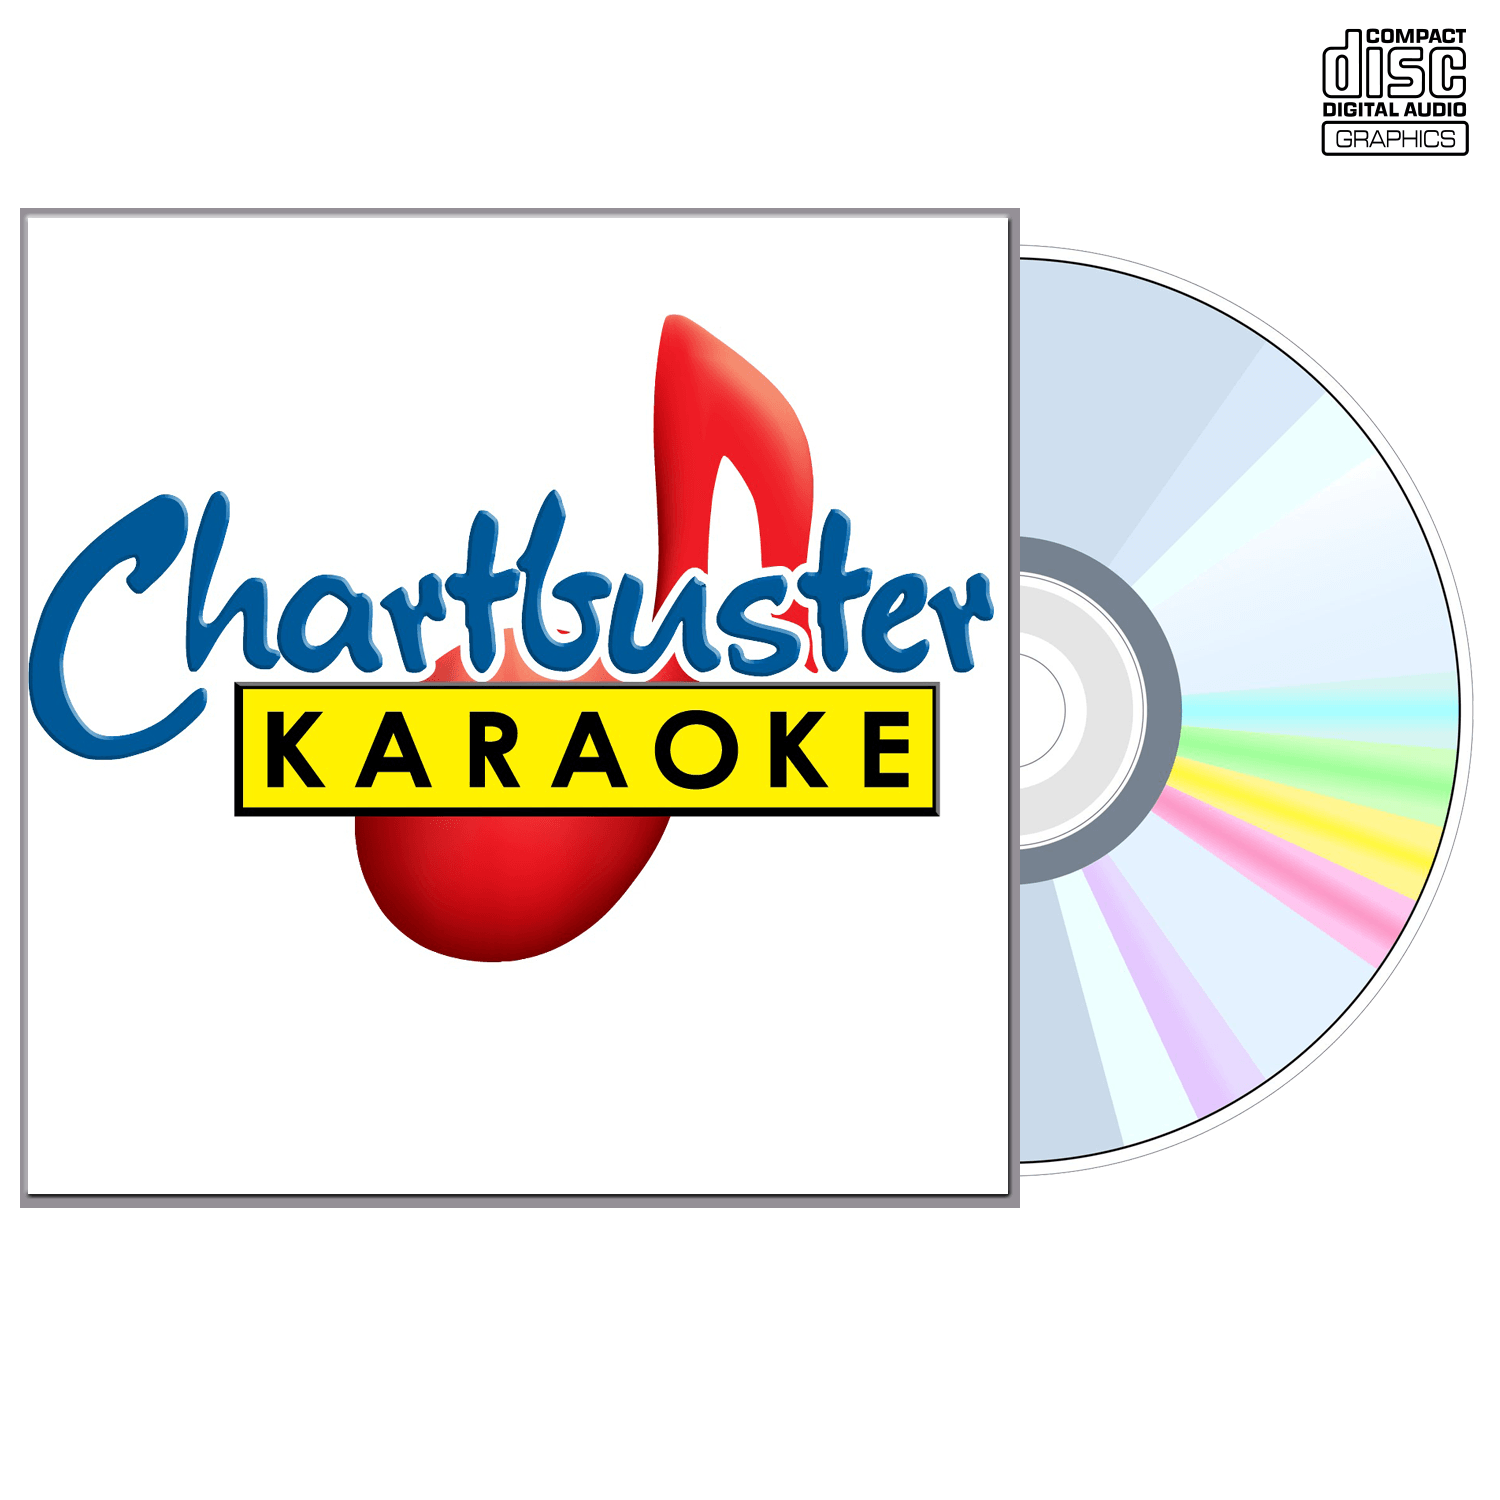 70's Collection Vol 10 - CD+G - Chartbuster Karaoke - Karaoke Home Entertainment